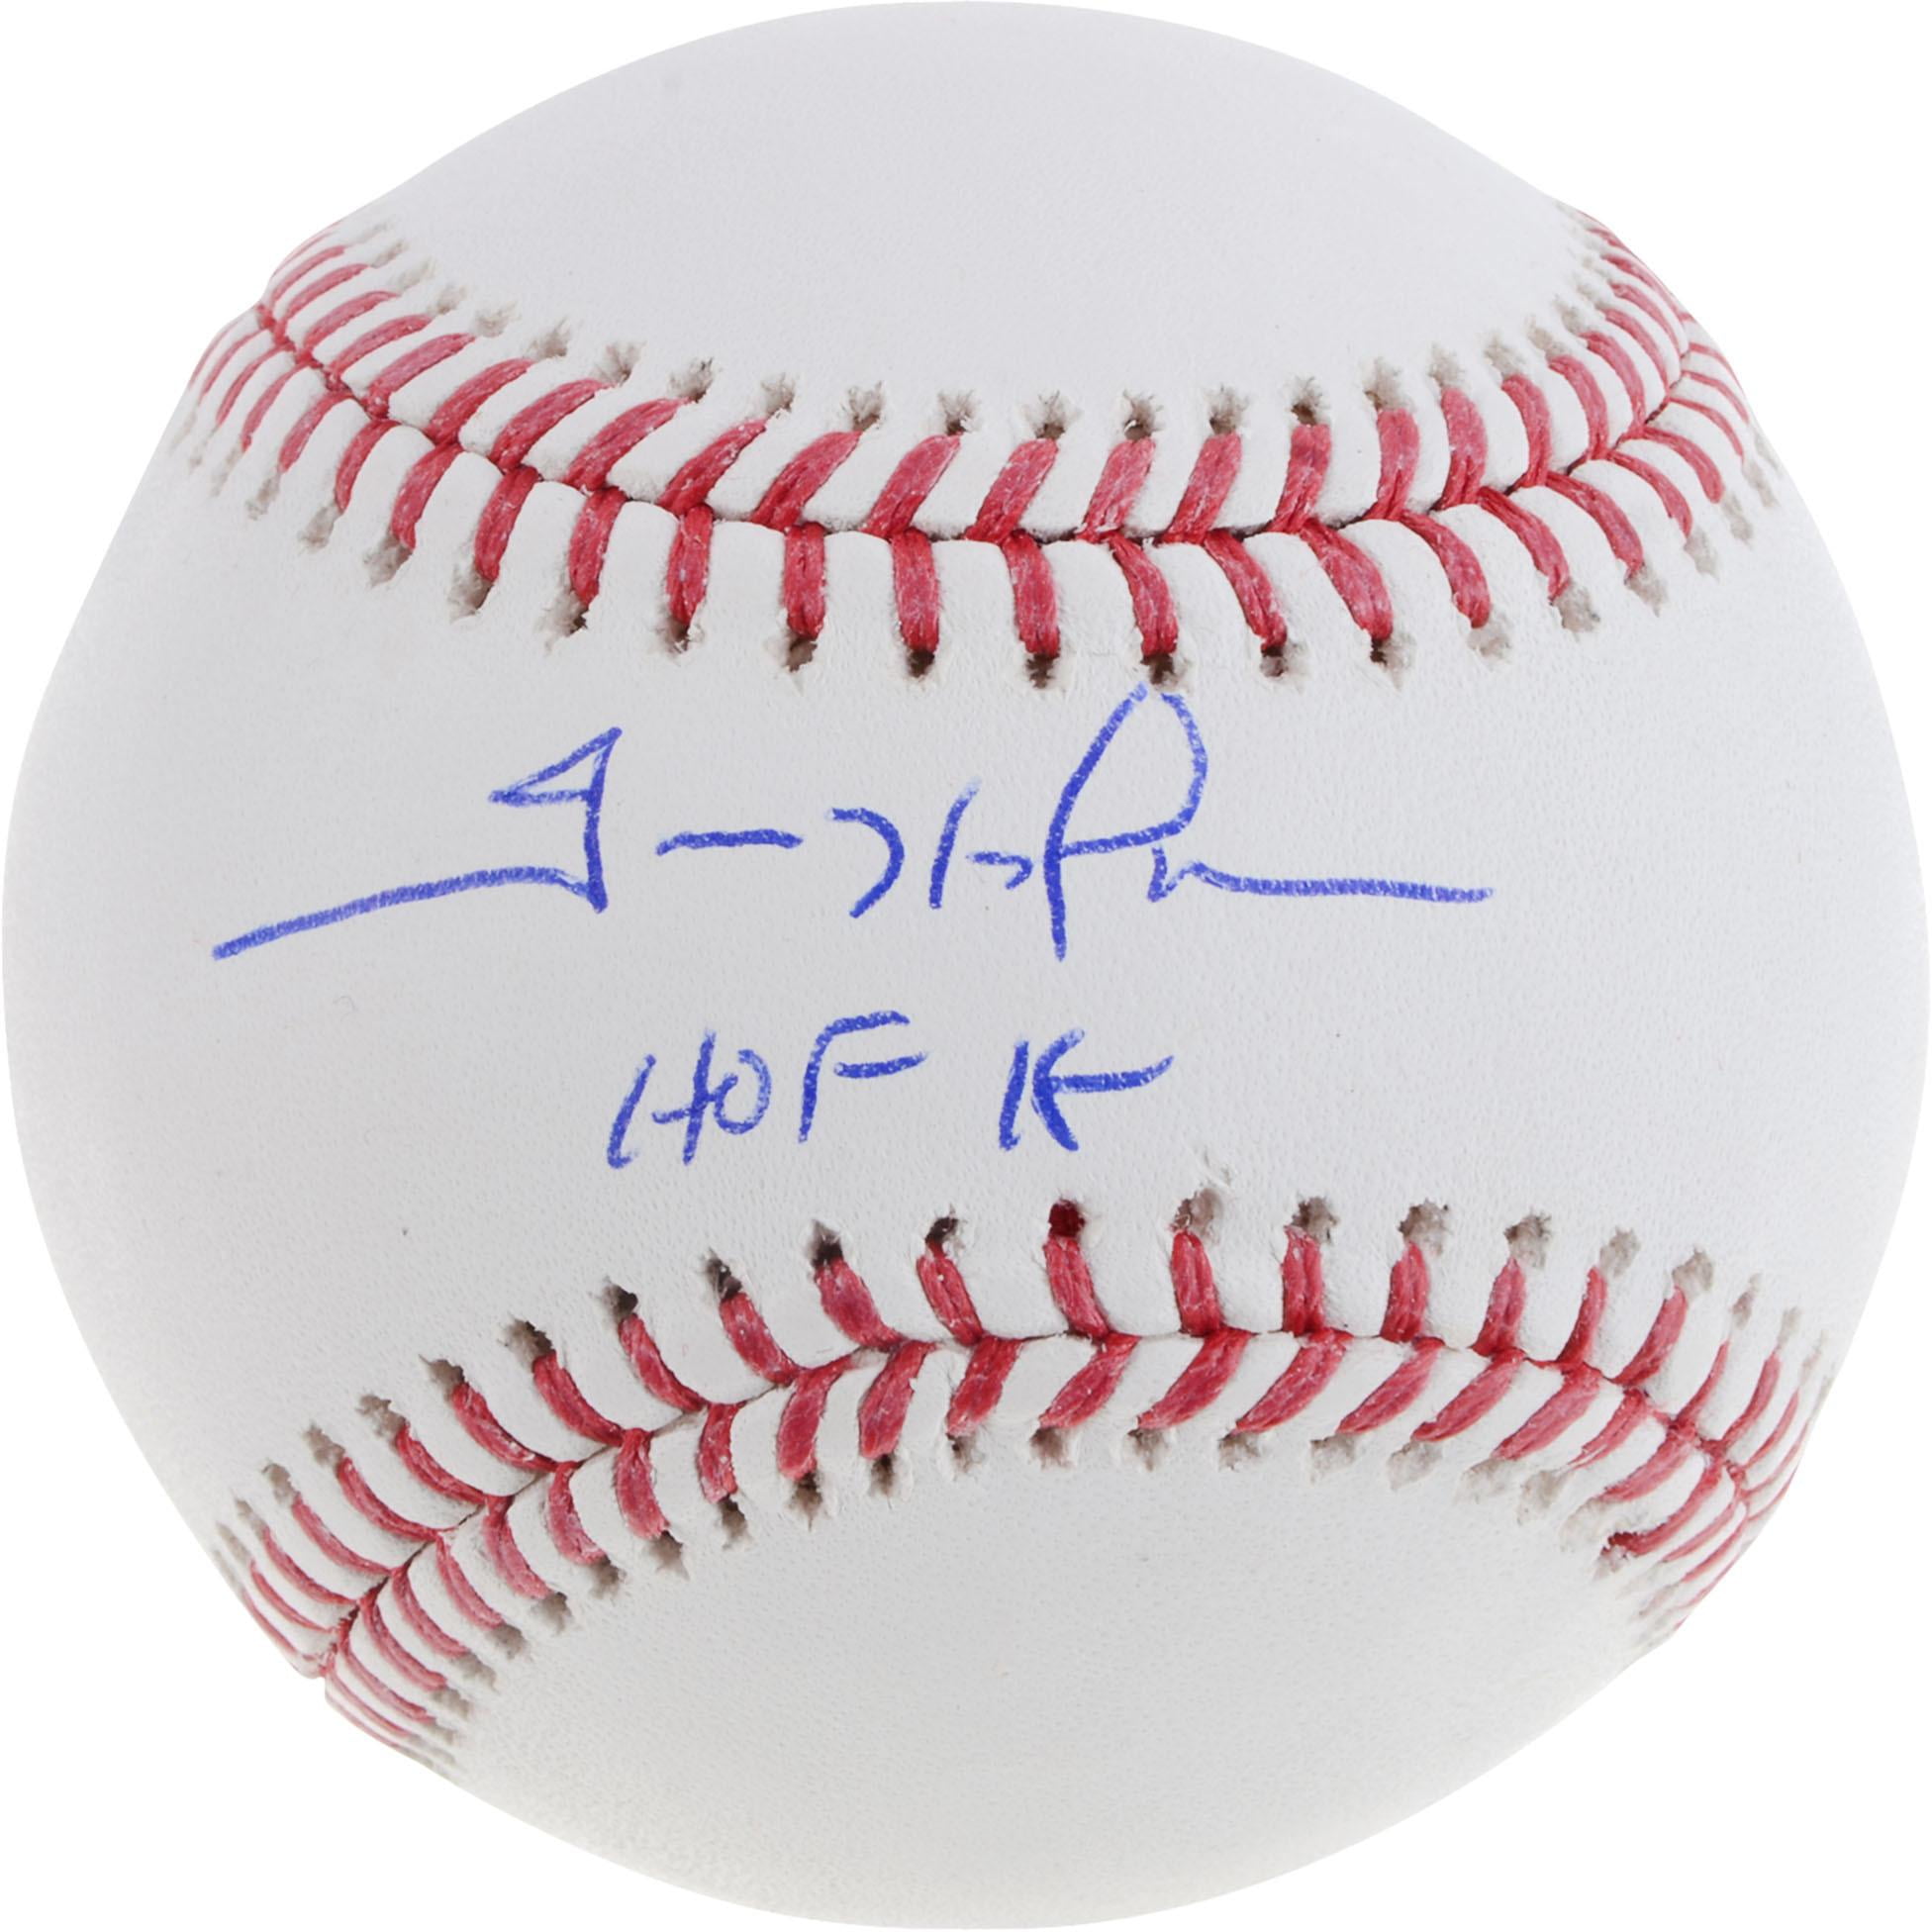 trevor hoffman autographed baseball